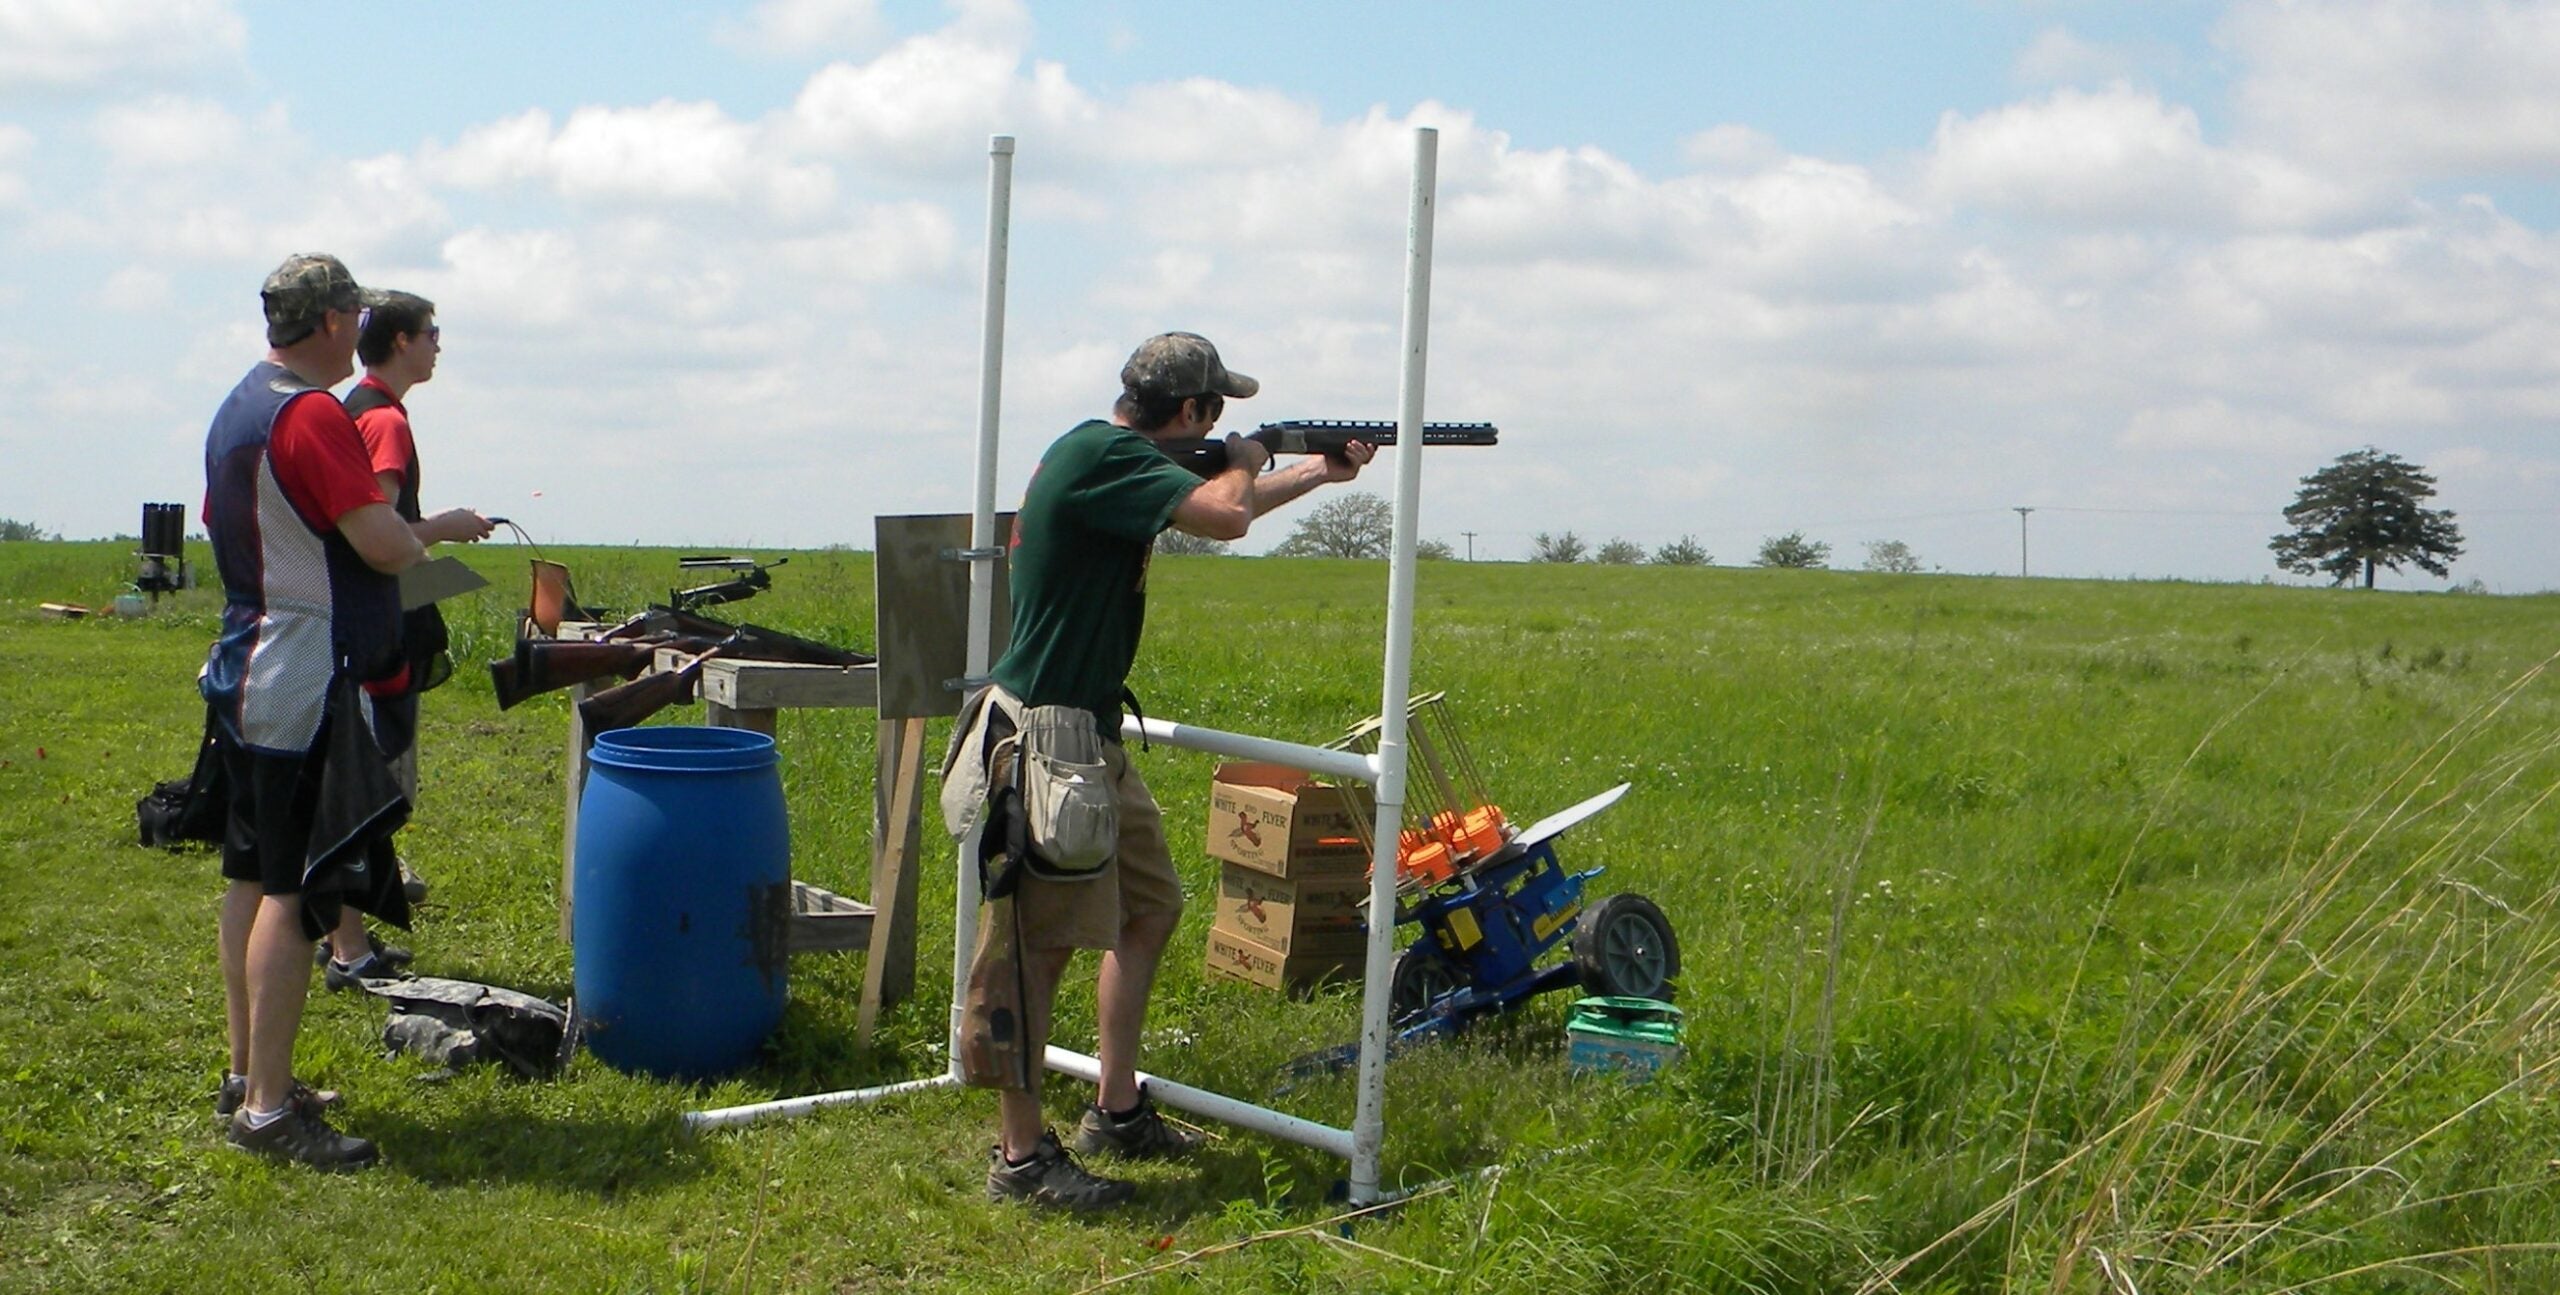 clay pigeon shooting range